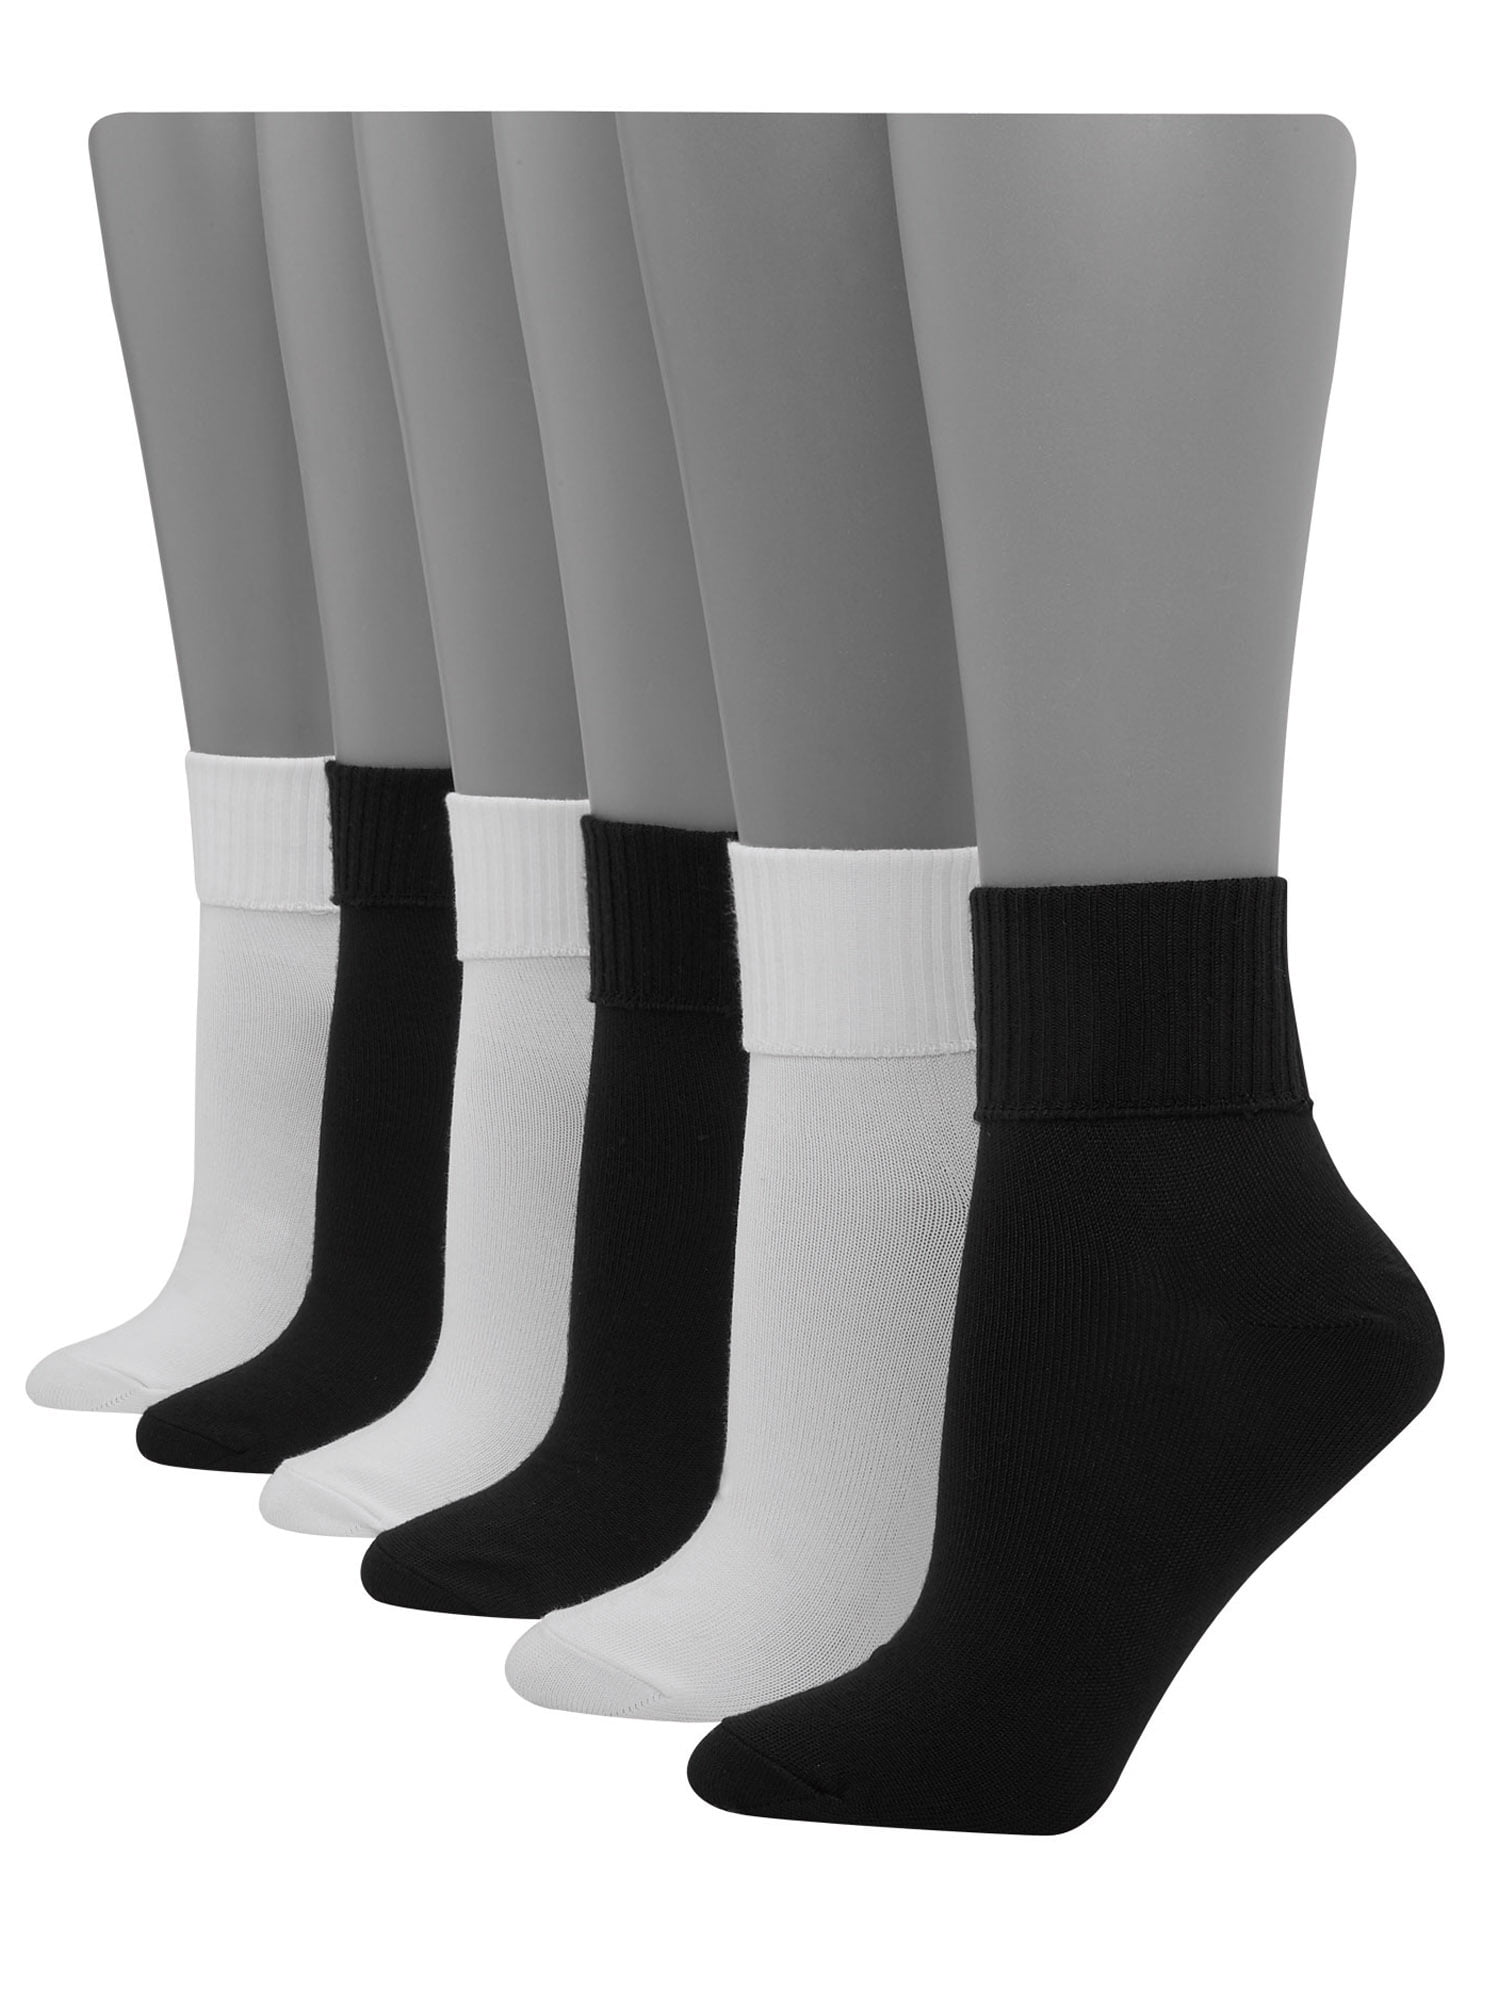 Women's ComfortSoft Cuff Socks, 6 Pack - Walmart.com